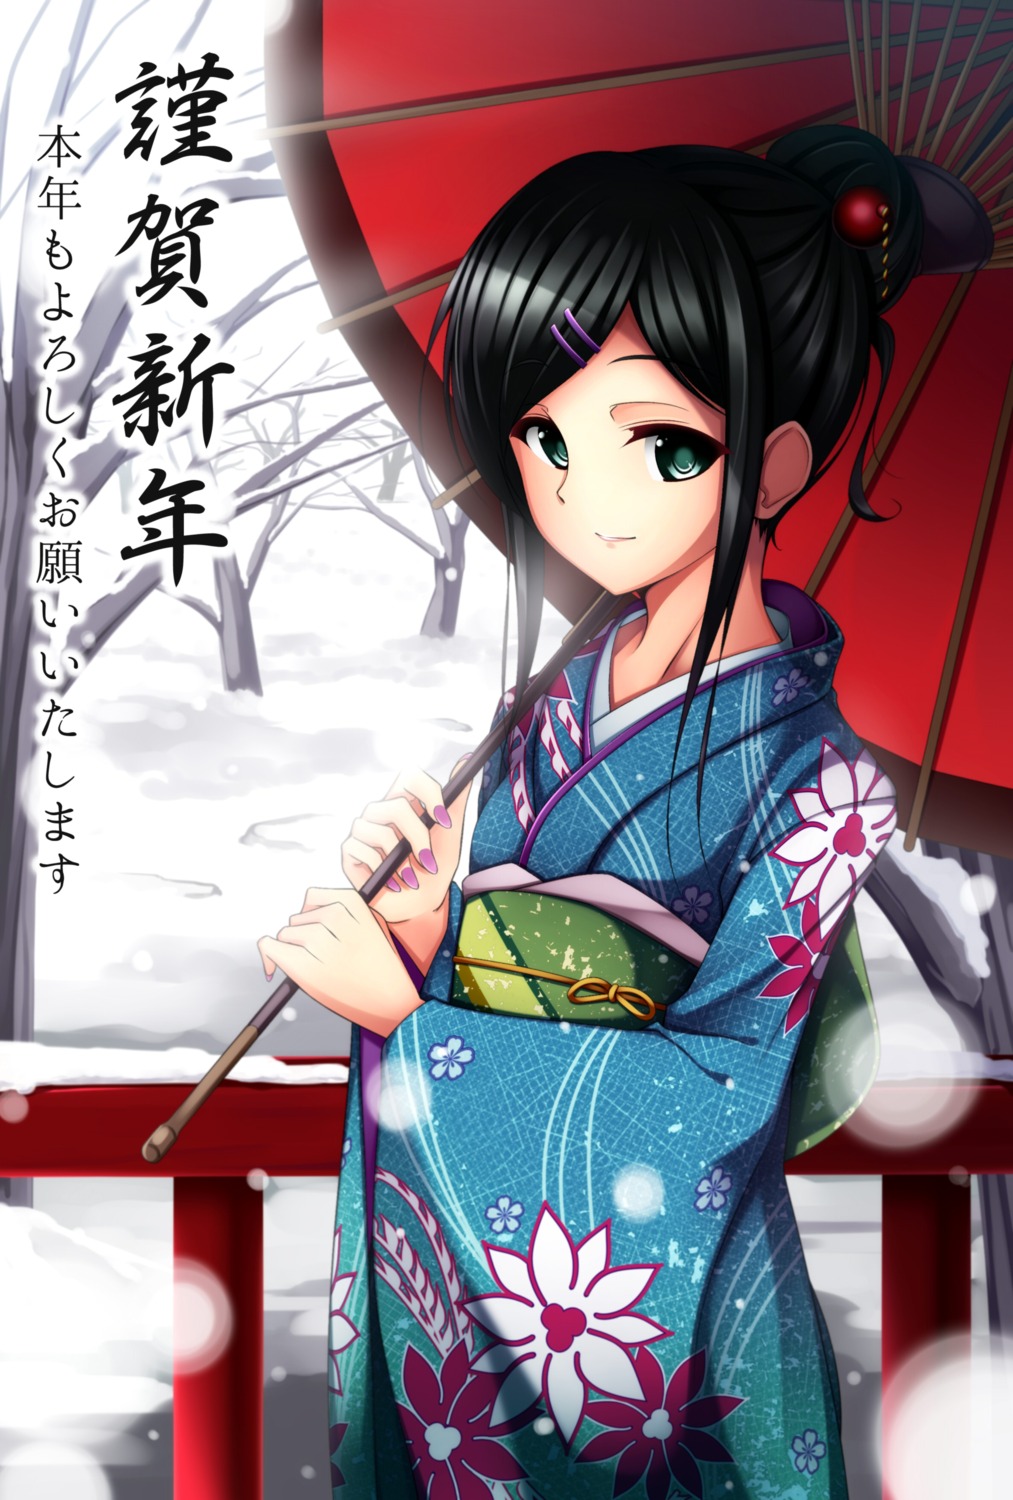 jk-ff kimono umbrella